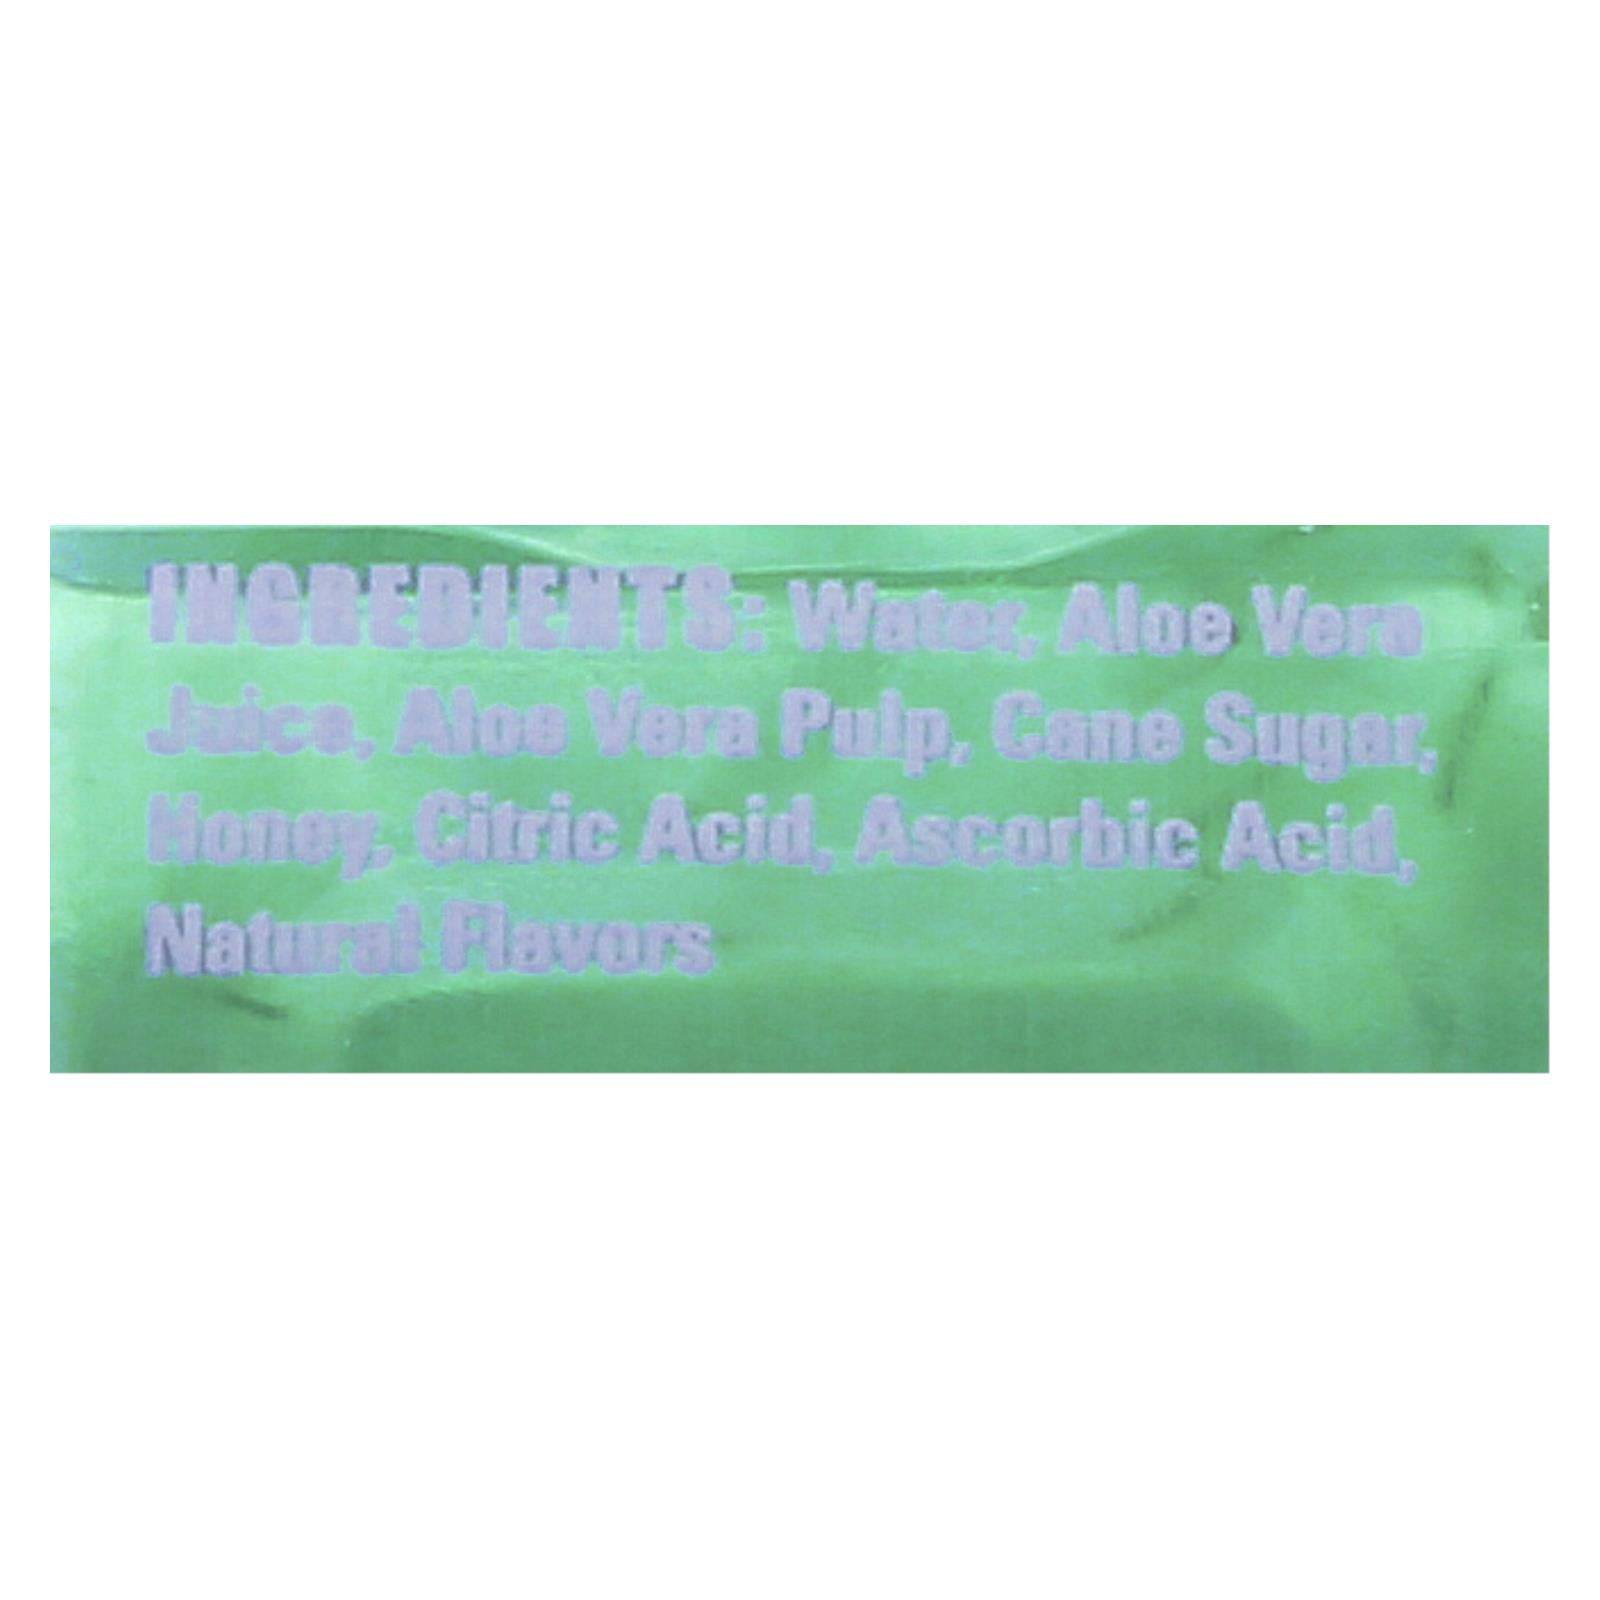 Buy Alo Original Exposed Aloe Vera Juice Drink -  Original And Honey - Case Of 12 - 16.9 Fl Oz.  at OnlyNaturals.us